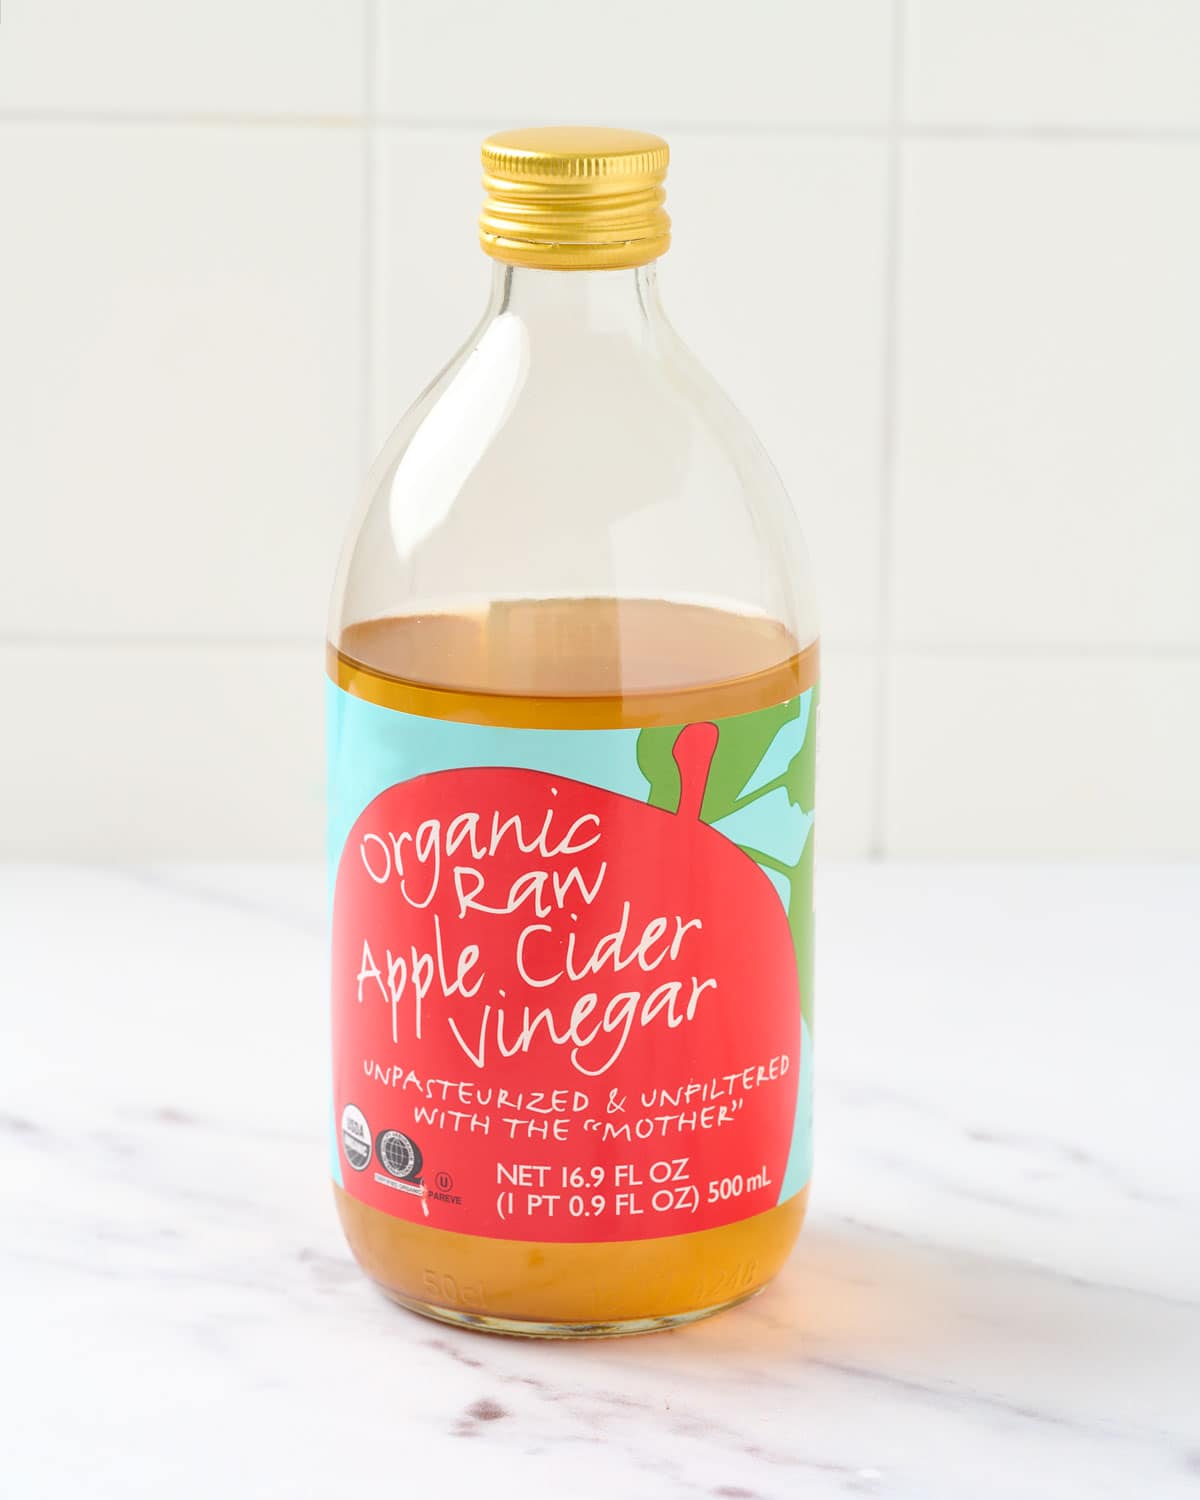 A bottle of apple cider vinegar on marble countertop.